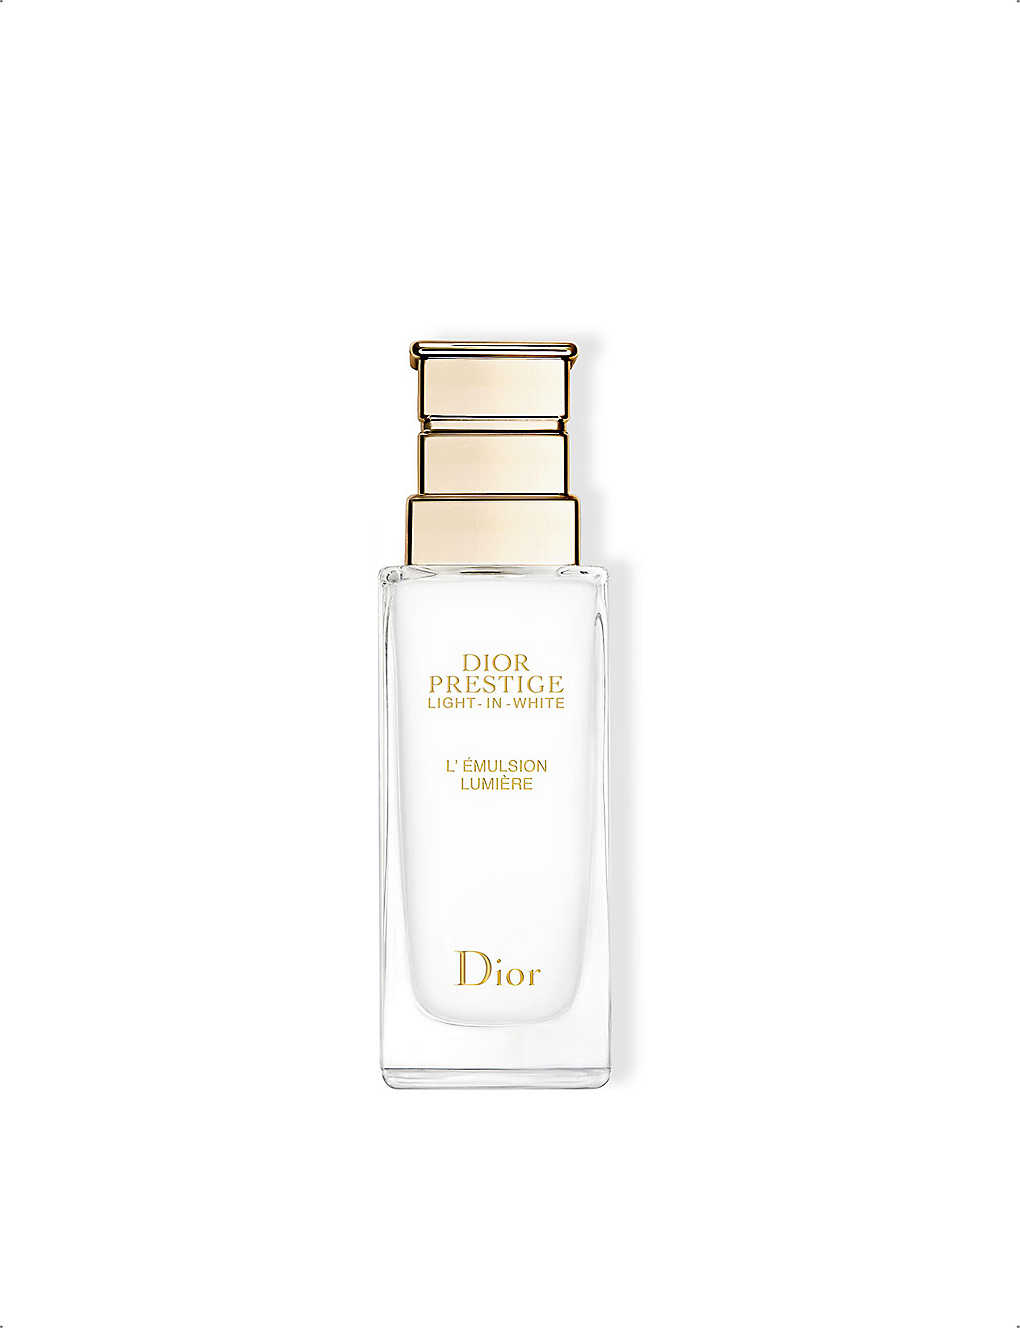 Dior Prestige Light-in-white L'émulsion Lumière